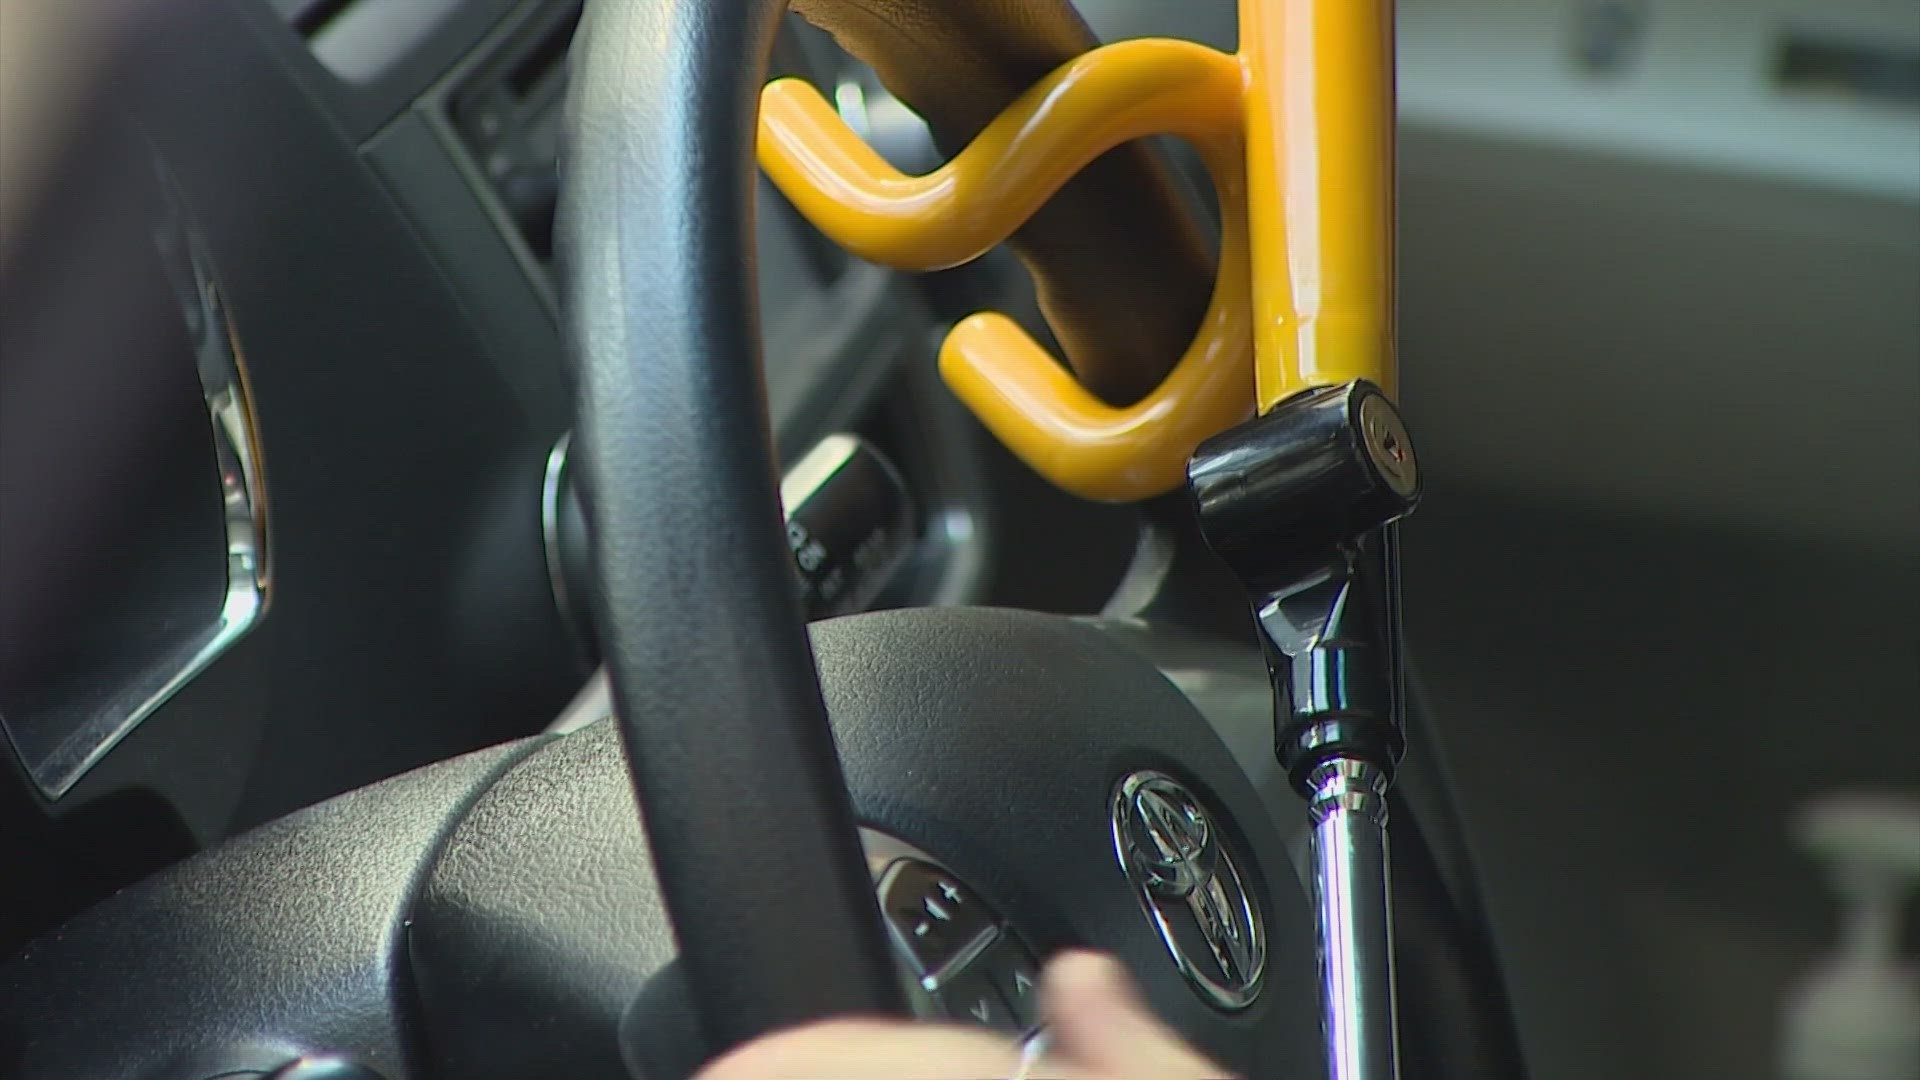 Hyundai and Kia drivers can get free steering wheel locks